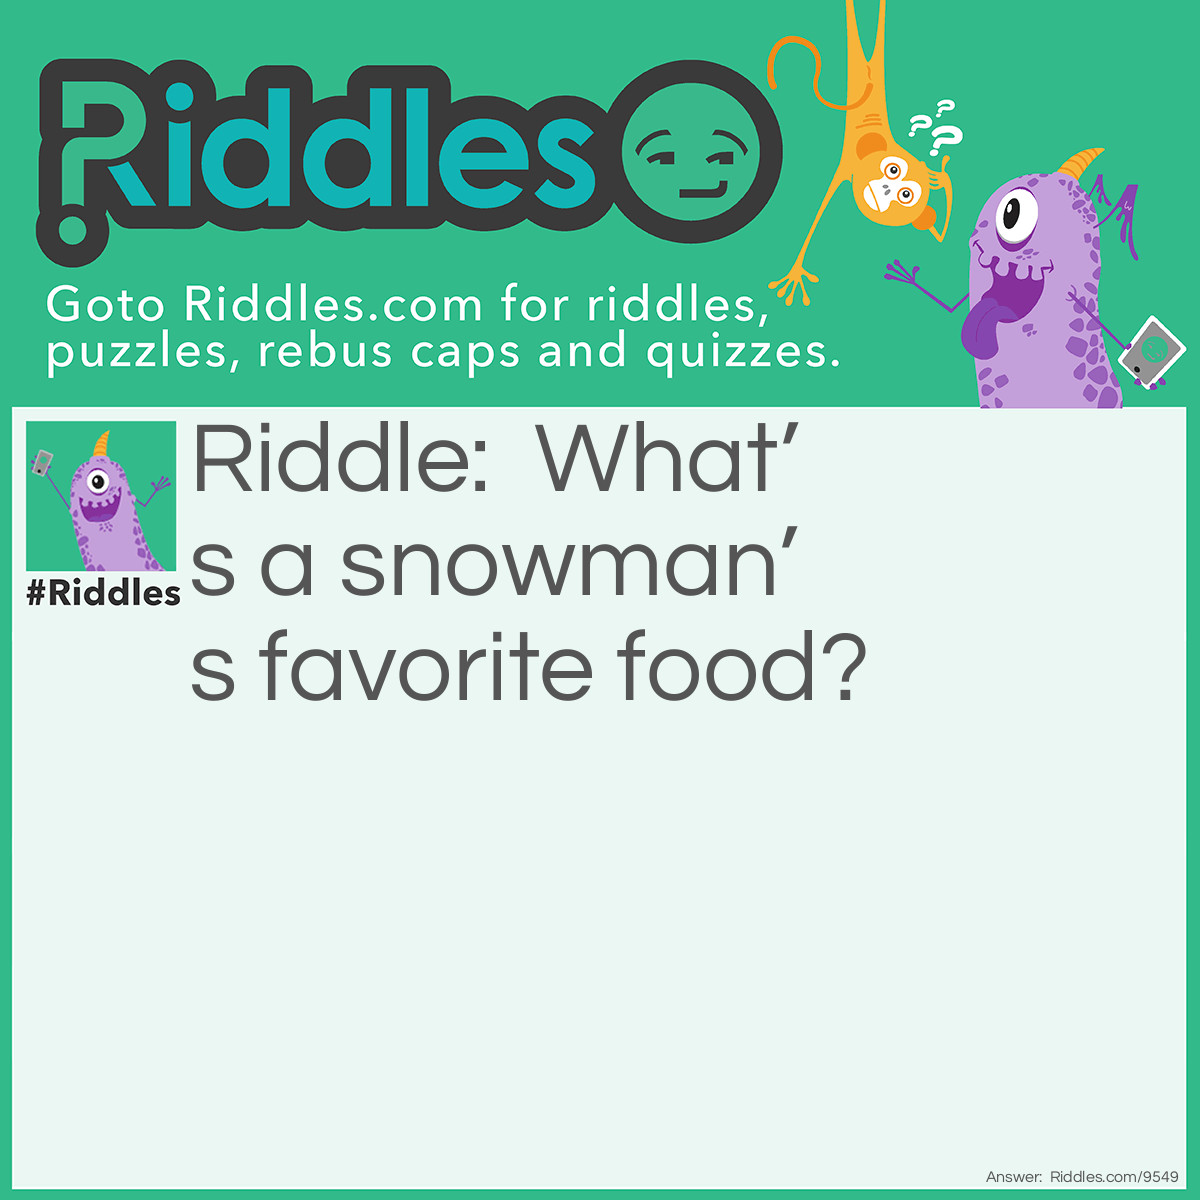 Riddle: What's a snowman's favorite food? Answer: A Brrrr-ger.